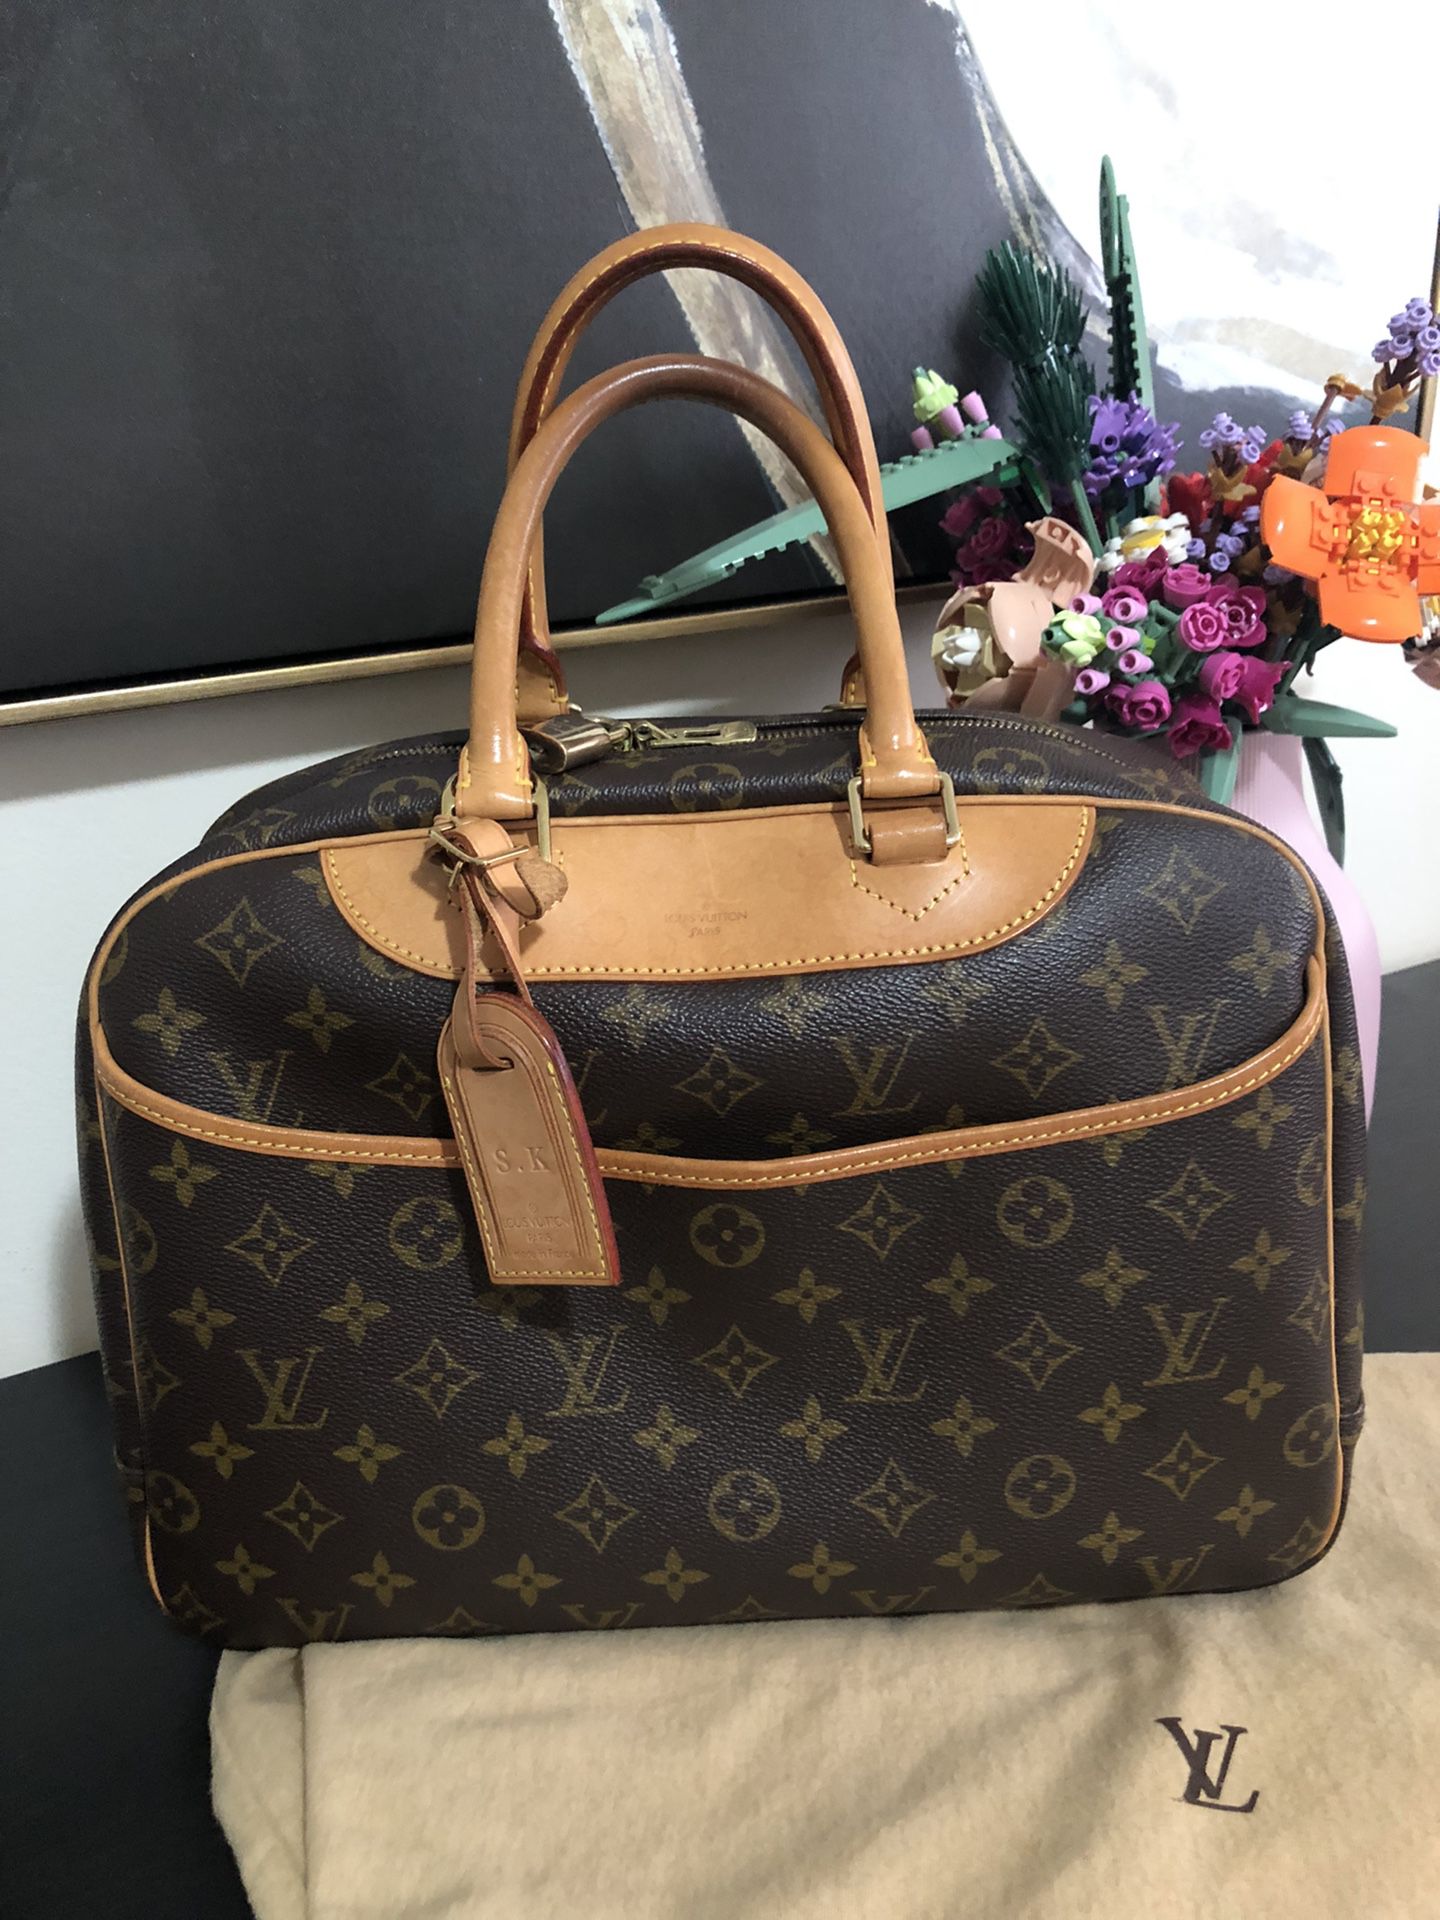 Louis Vuitton Bag Handle Cracking